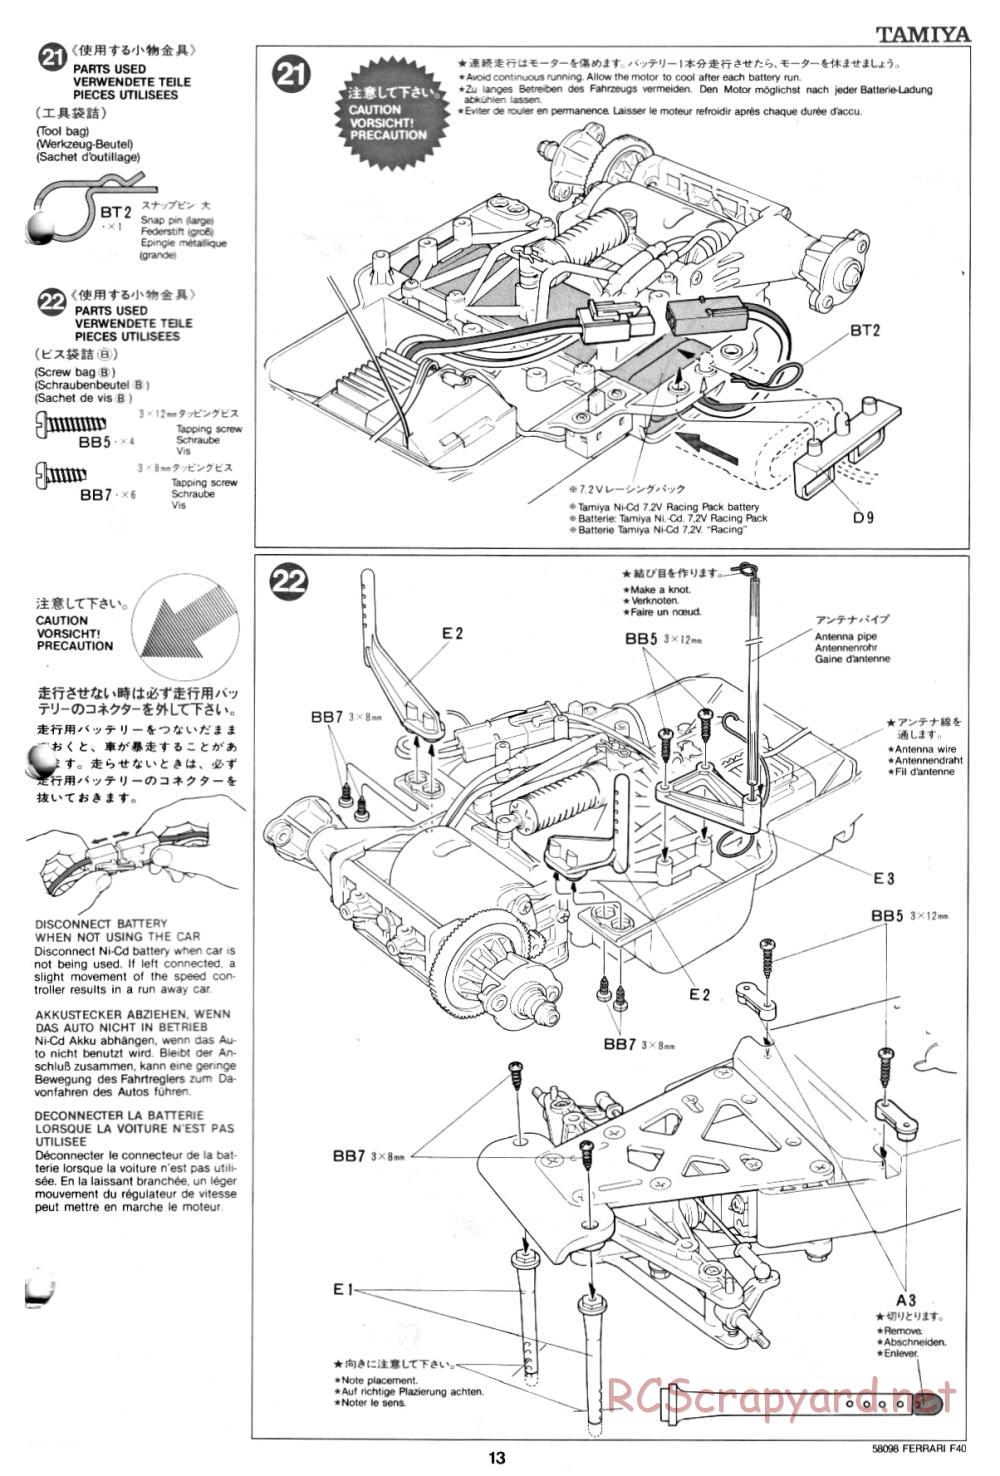 Tamiya - Ferrari F40 - 58098 - Manual - Page 13